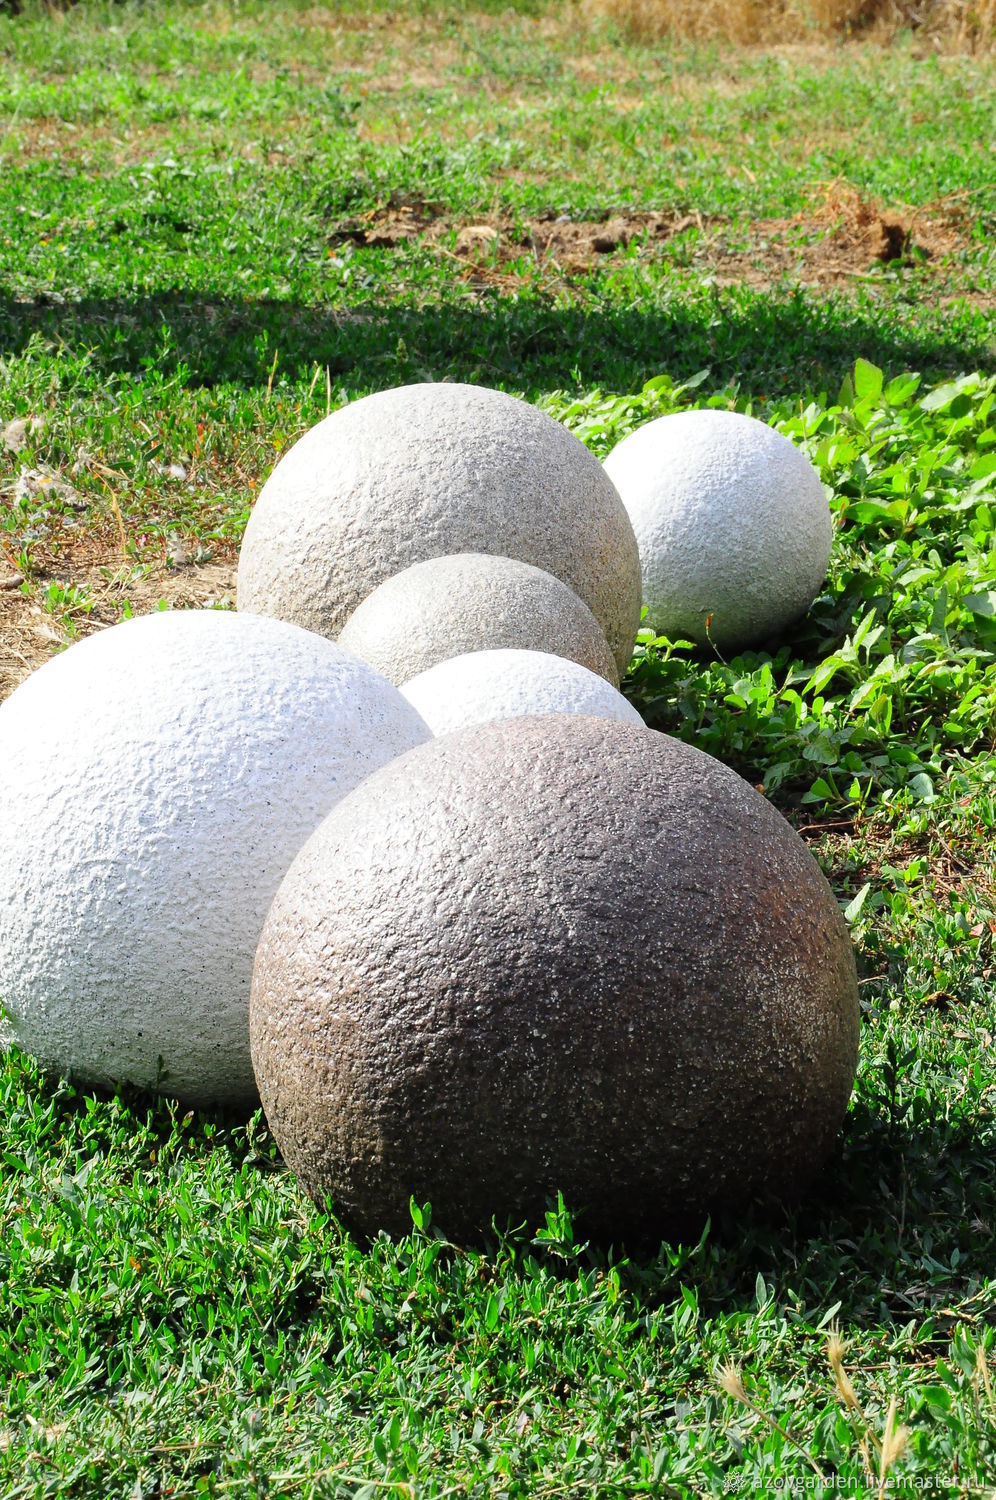 Ceramic Fireplace Balls Elegant Ball Concrete Garden Finial to the Pole with A Diameter Of 30cm 20cm – Ð·Ð°ÐºÐ°Ð·Ð°ÑÑ Ð½Ð° Ð¯ÑÐ¼Ð°ÑÐºÐµ ÐÐ°ÑÑÐµÑÐ¾Ð² – Aacmr